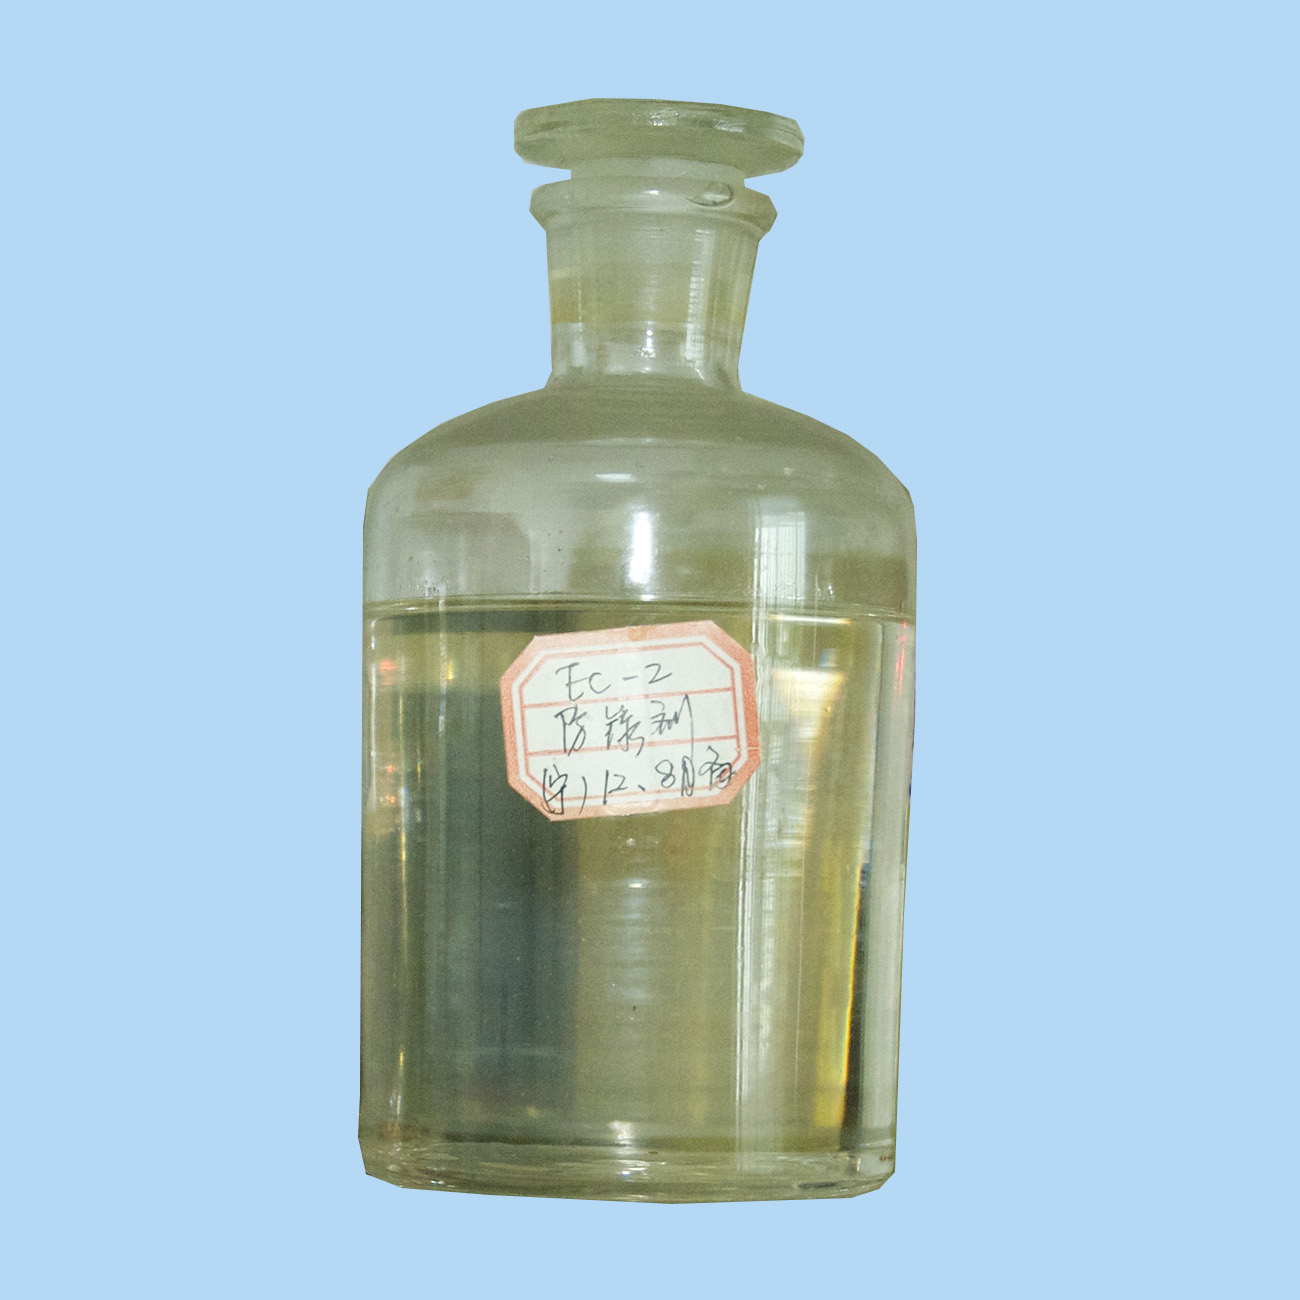 EC-2水剂防锈剂